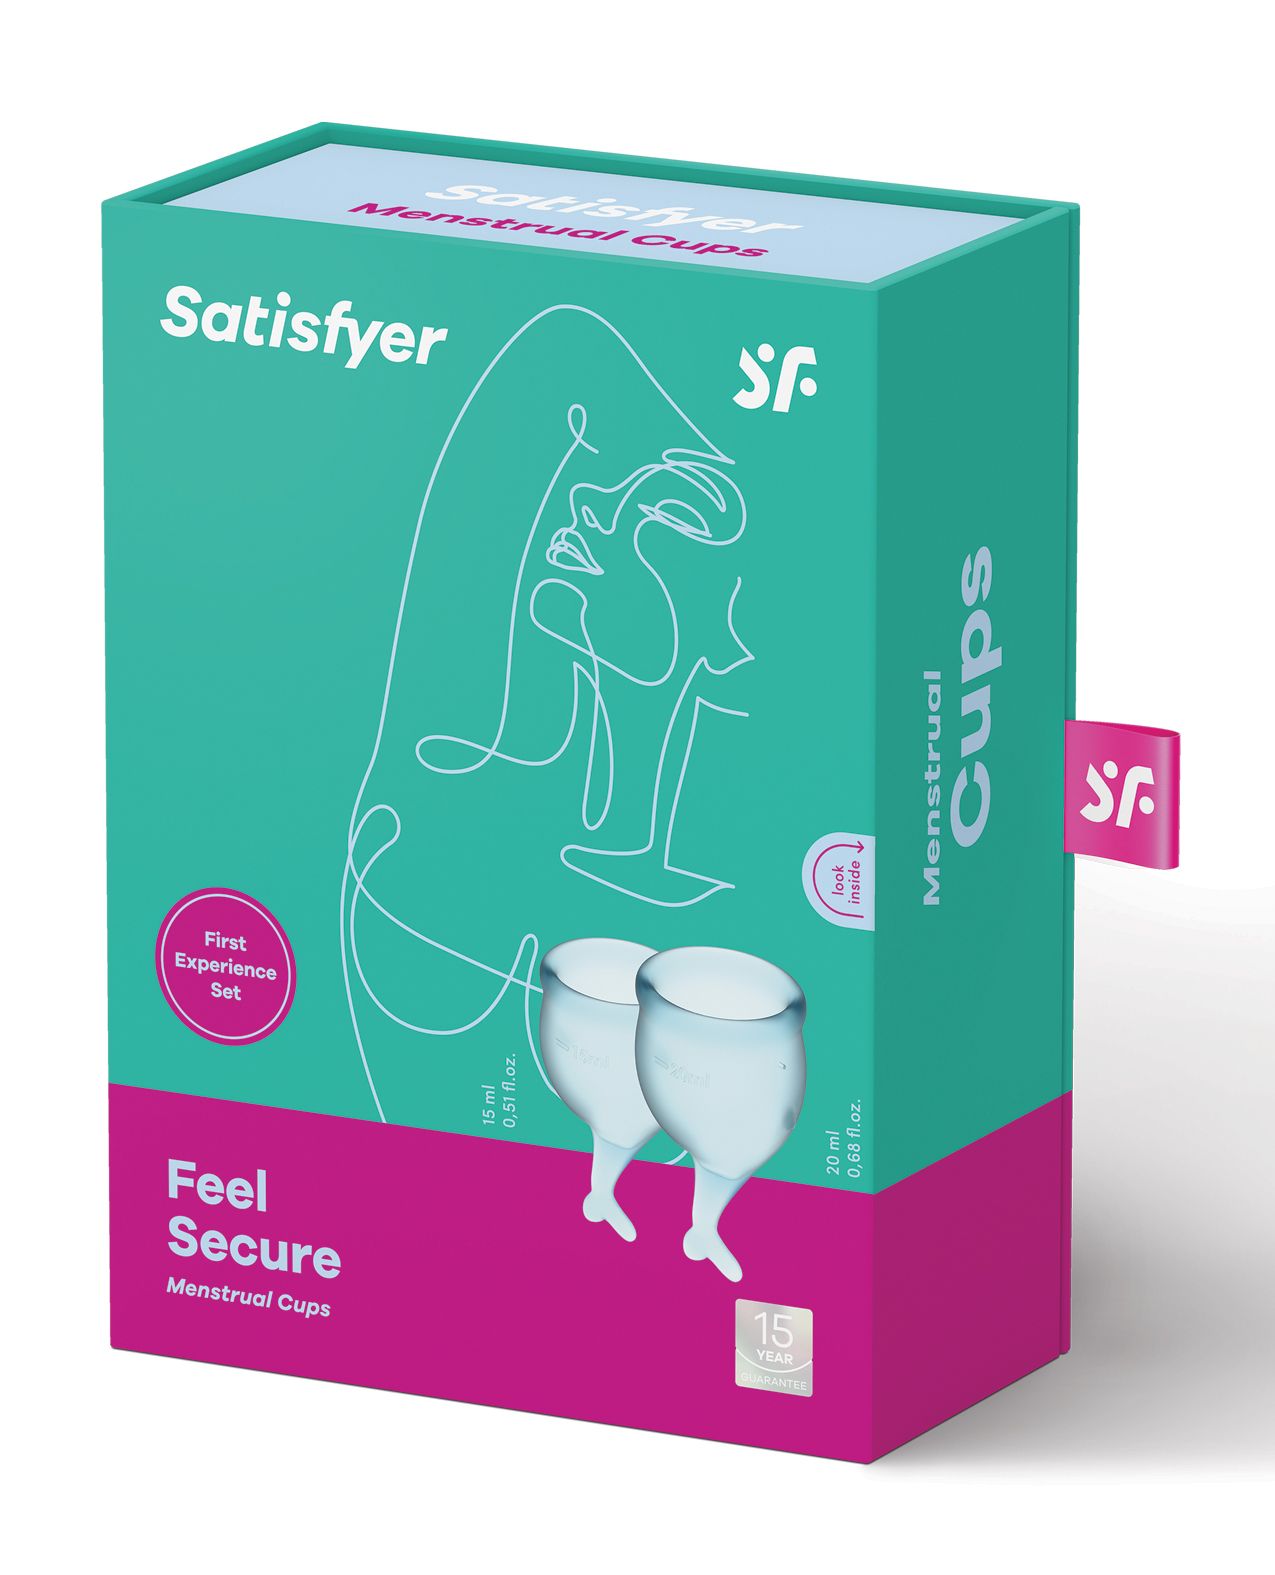 Satifyer Feel Secure Menstrual Cup in its box (blue).